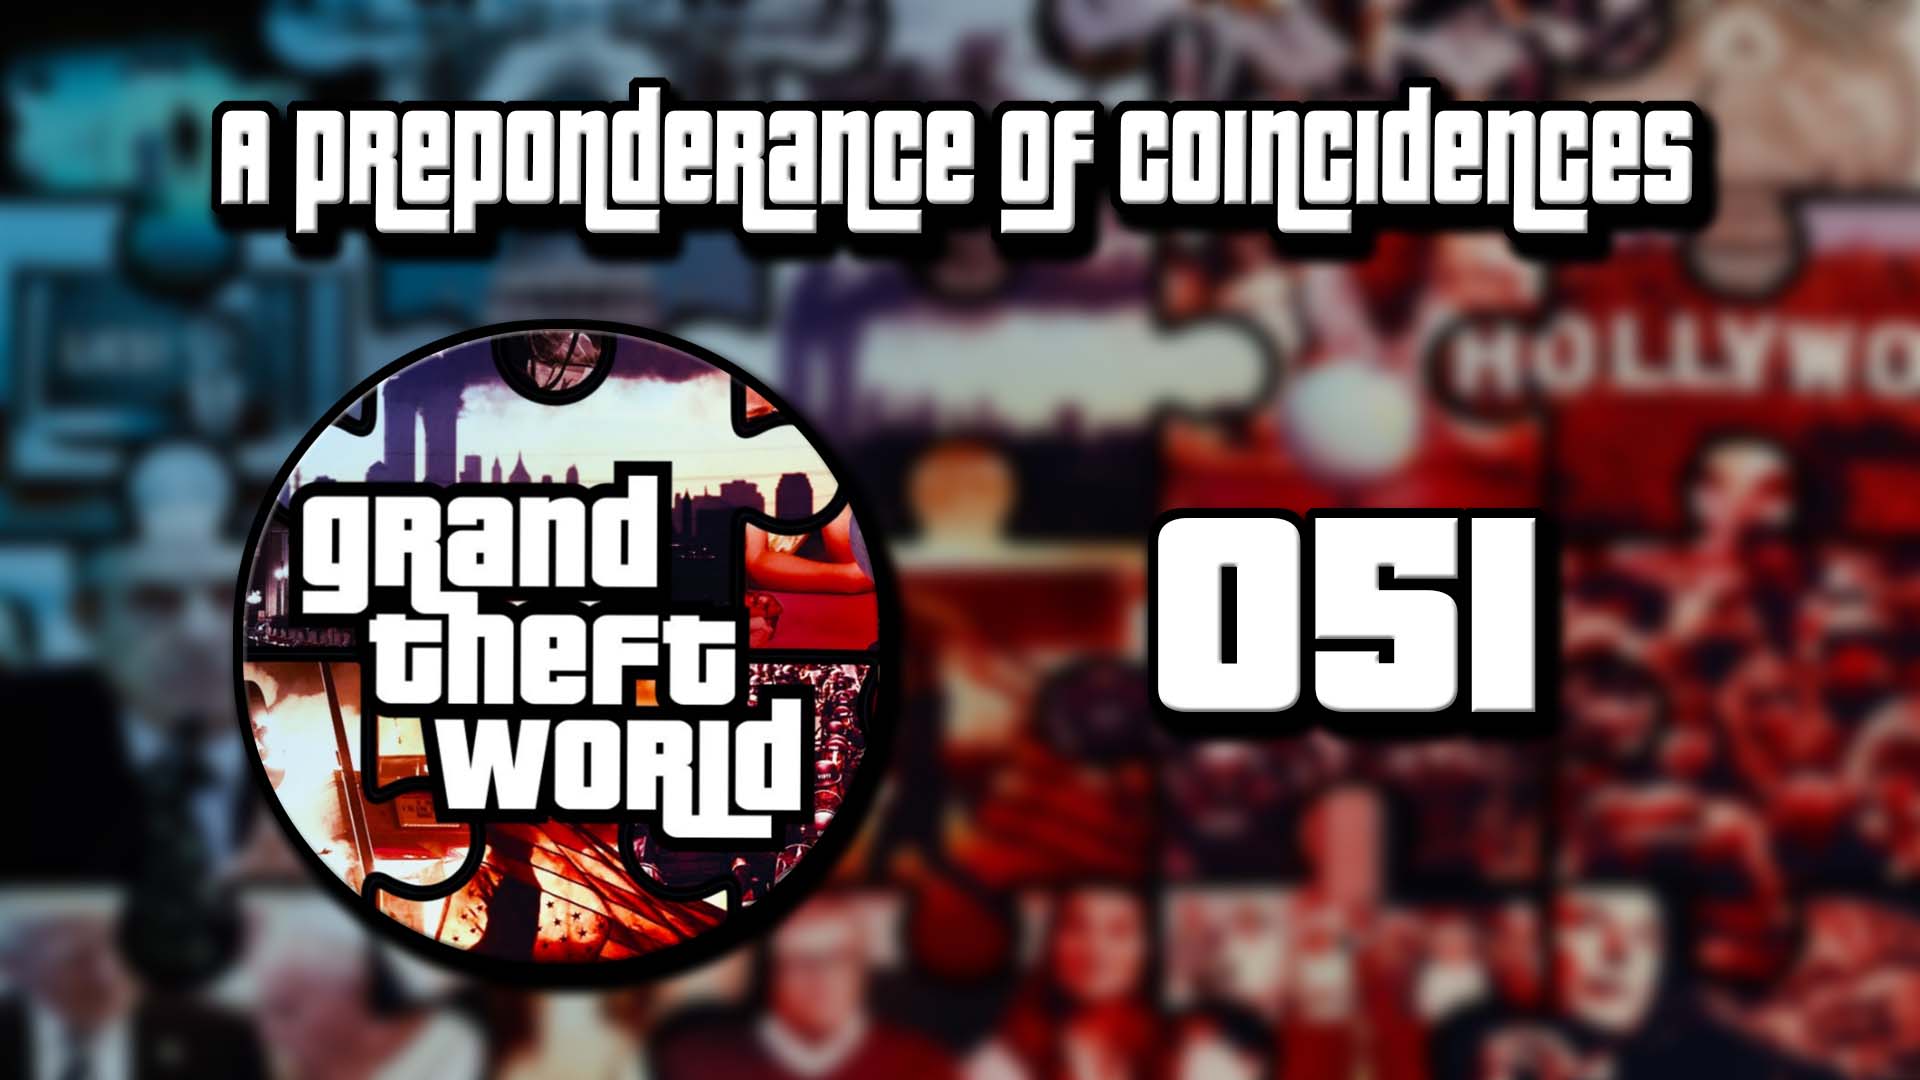 Grand Theft World Podcast 051 | A Preponderance of Coincidences